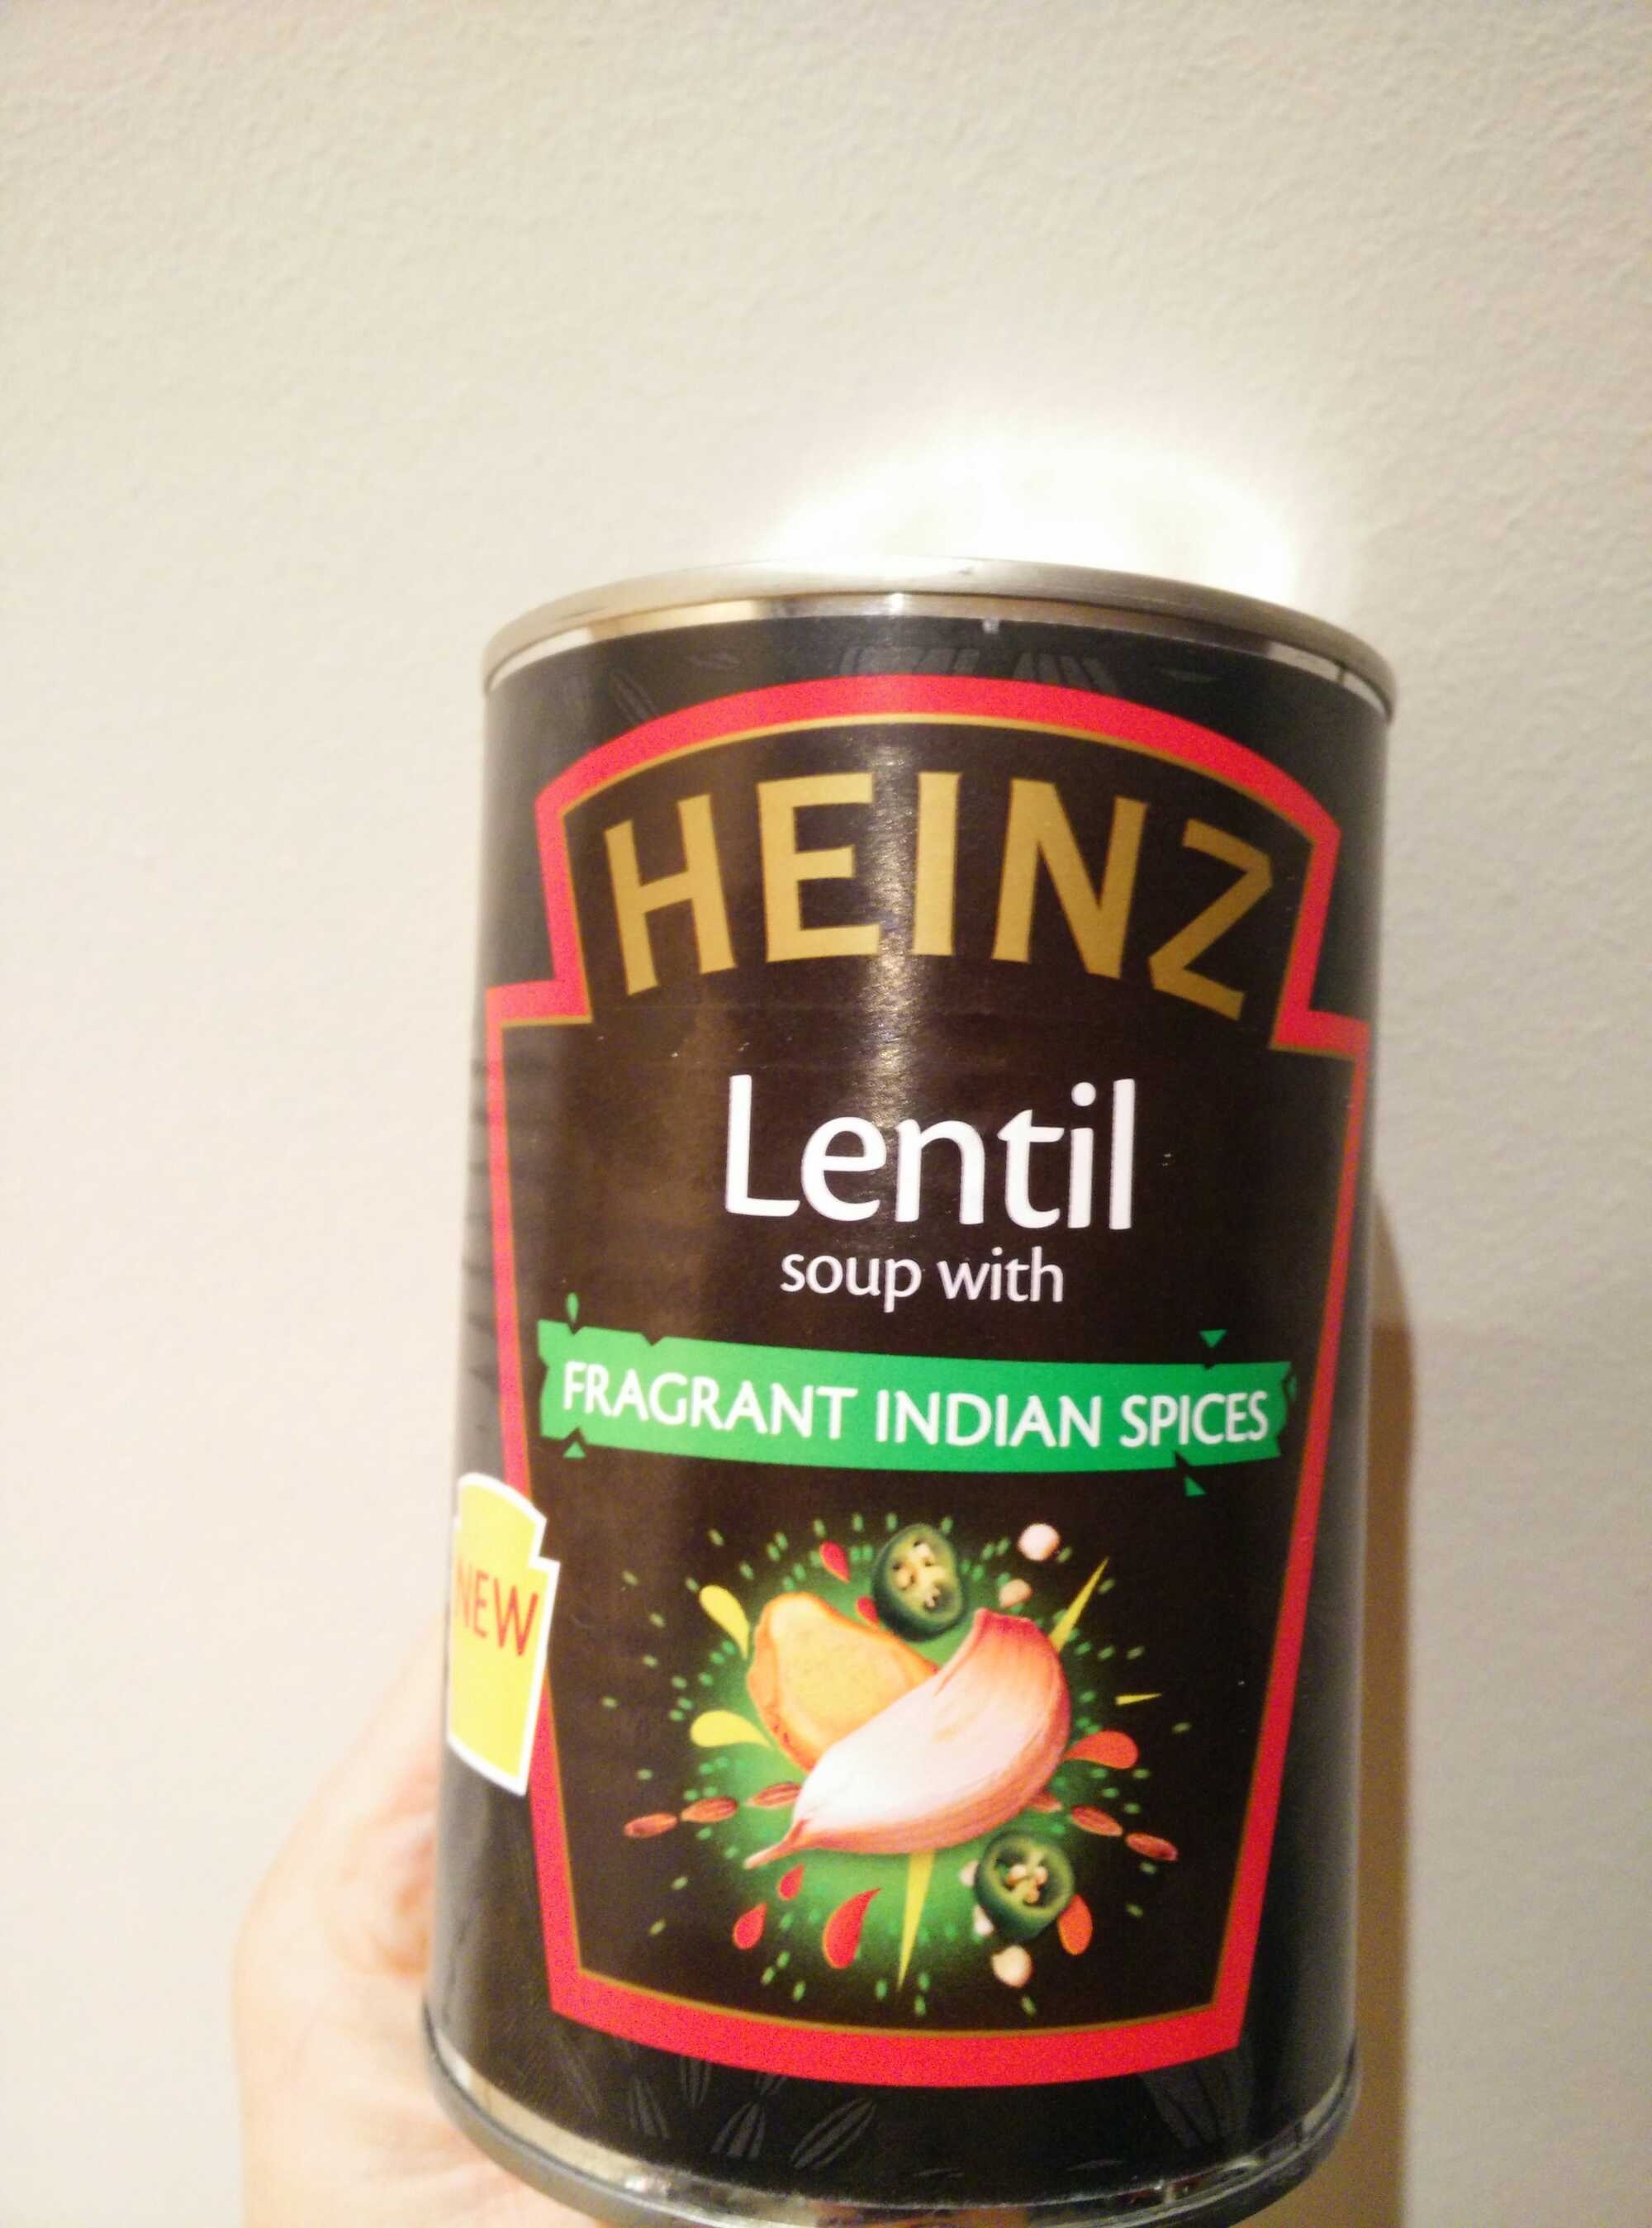 Lentil soup with fragrant indian spices - Product - en